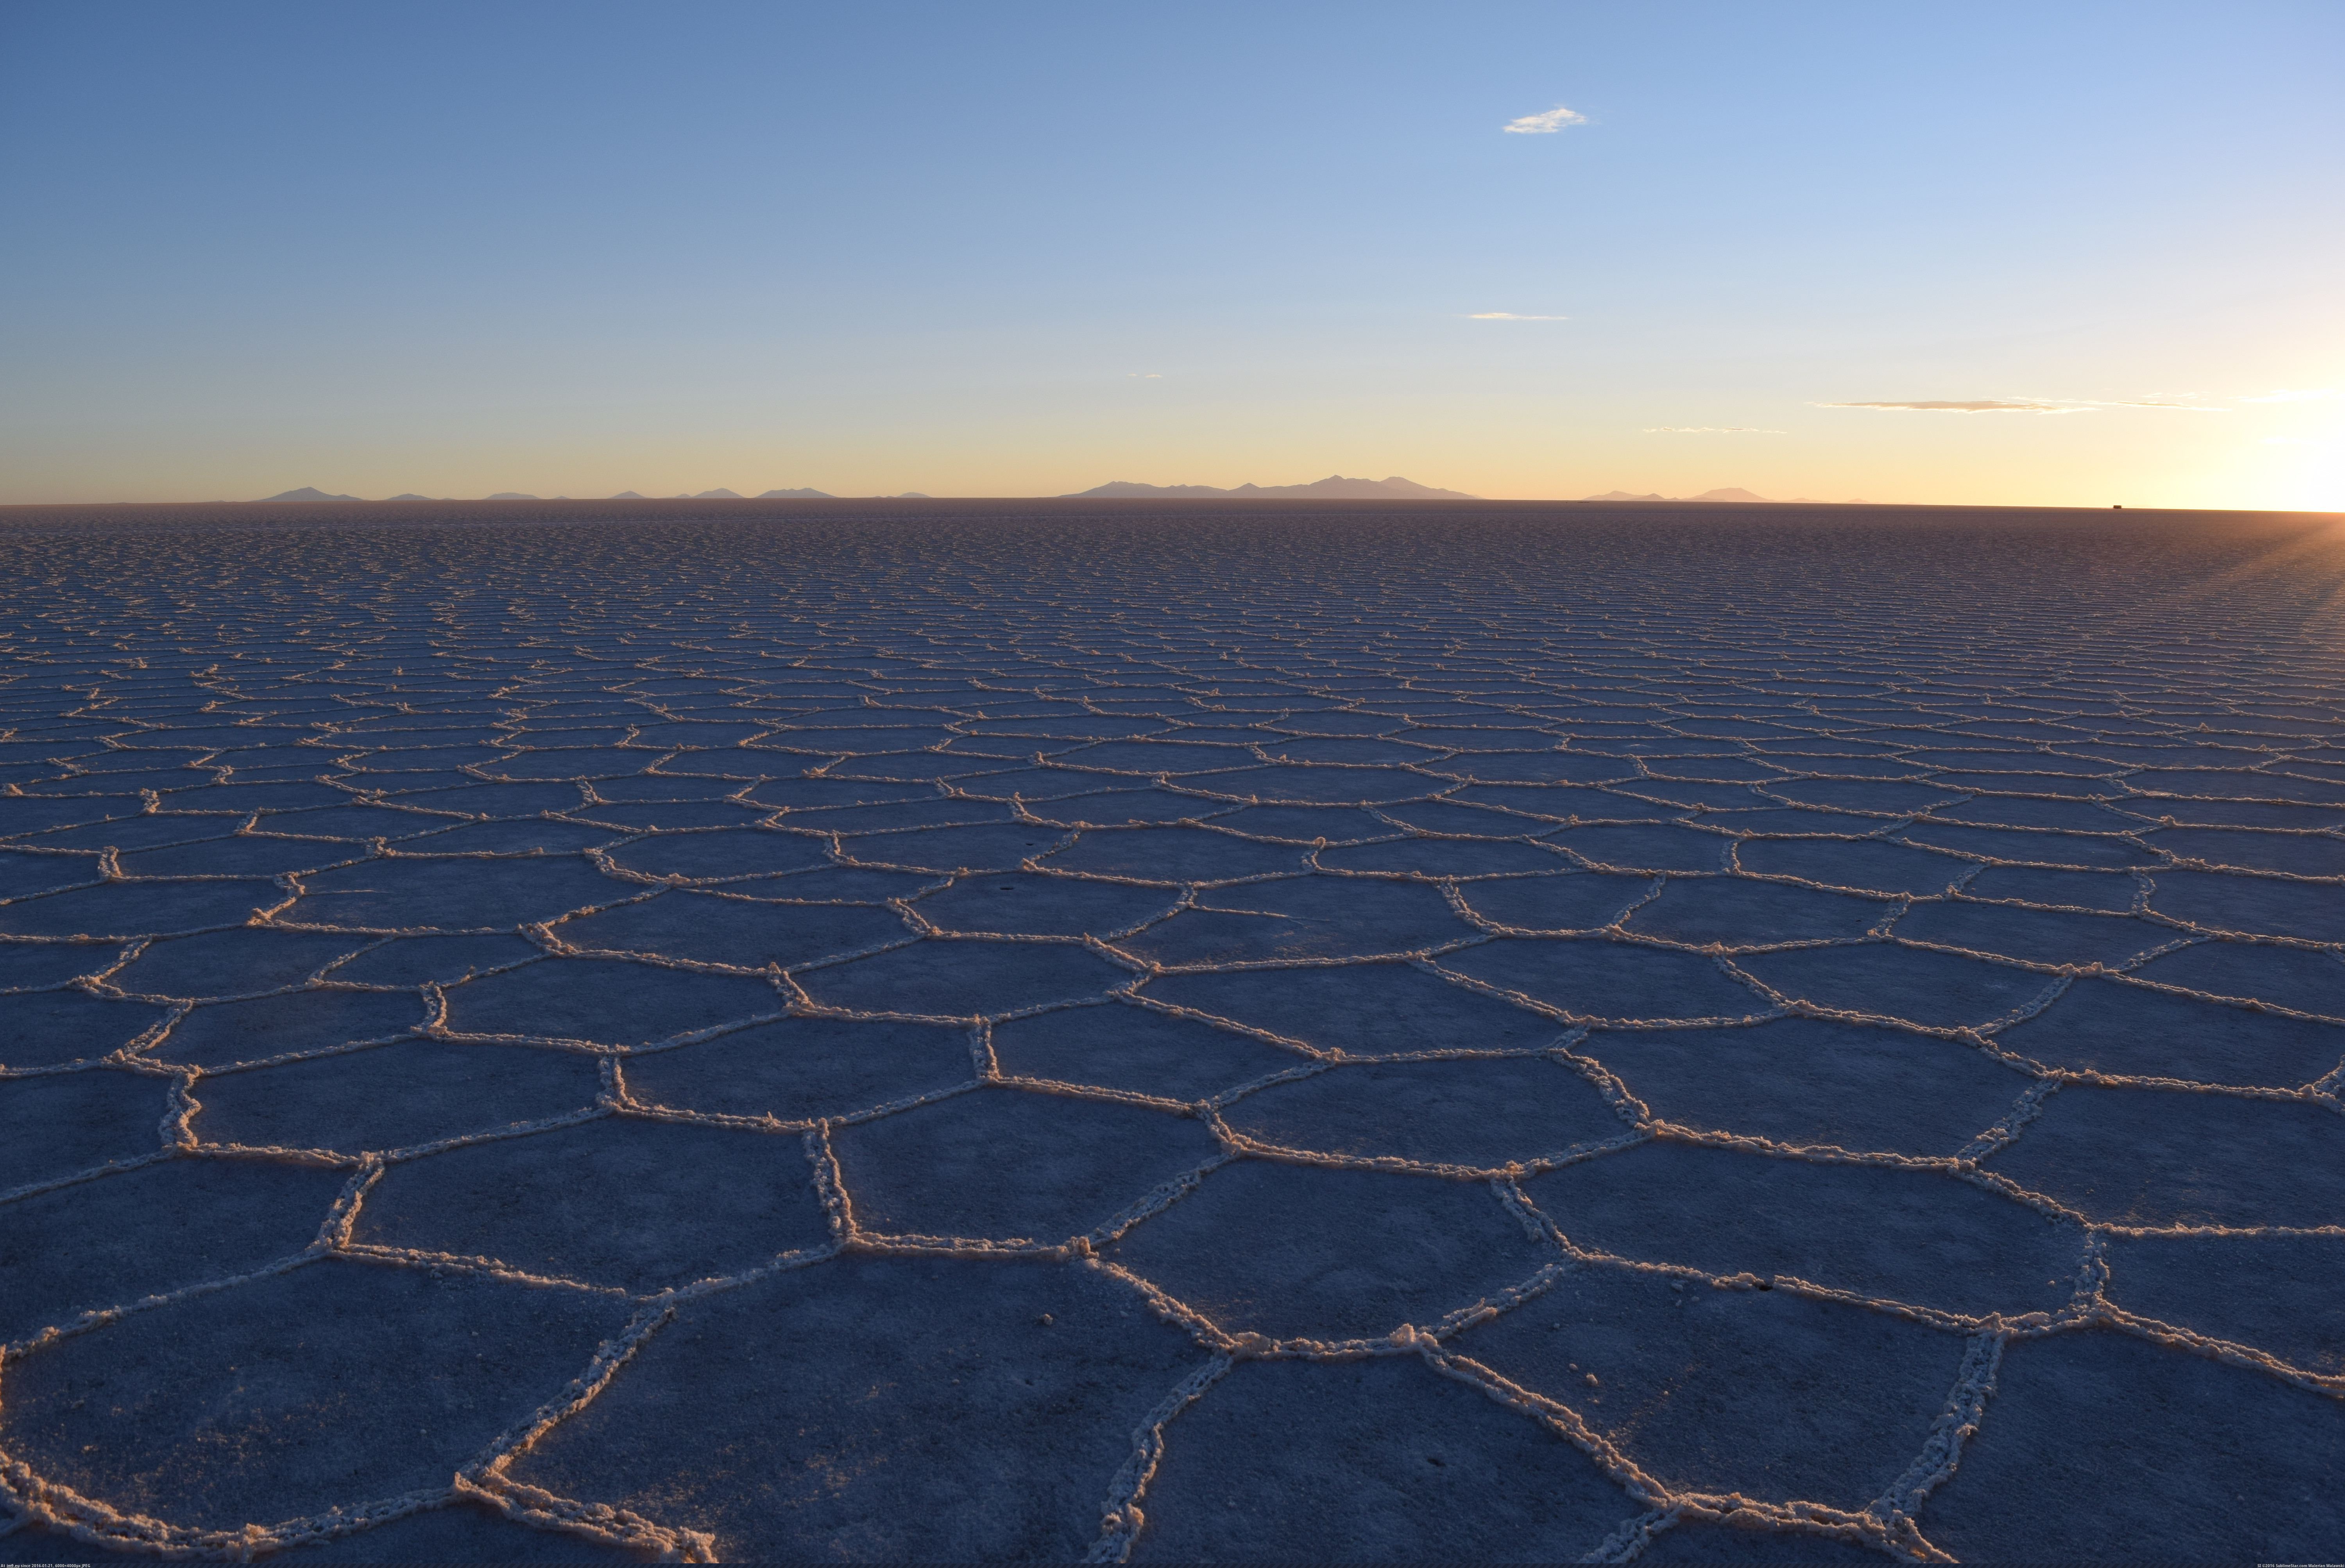 Porn Salt Flats - Pic. #Sunset #6000x4000 #Uyuni #Salt #Flats, 2107137B â€“ My r/EARTHPORN favs